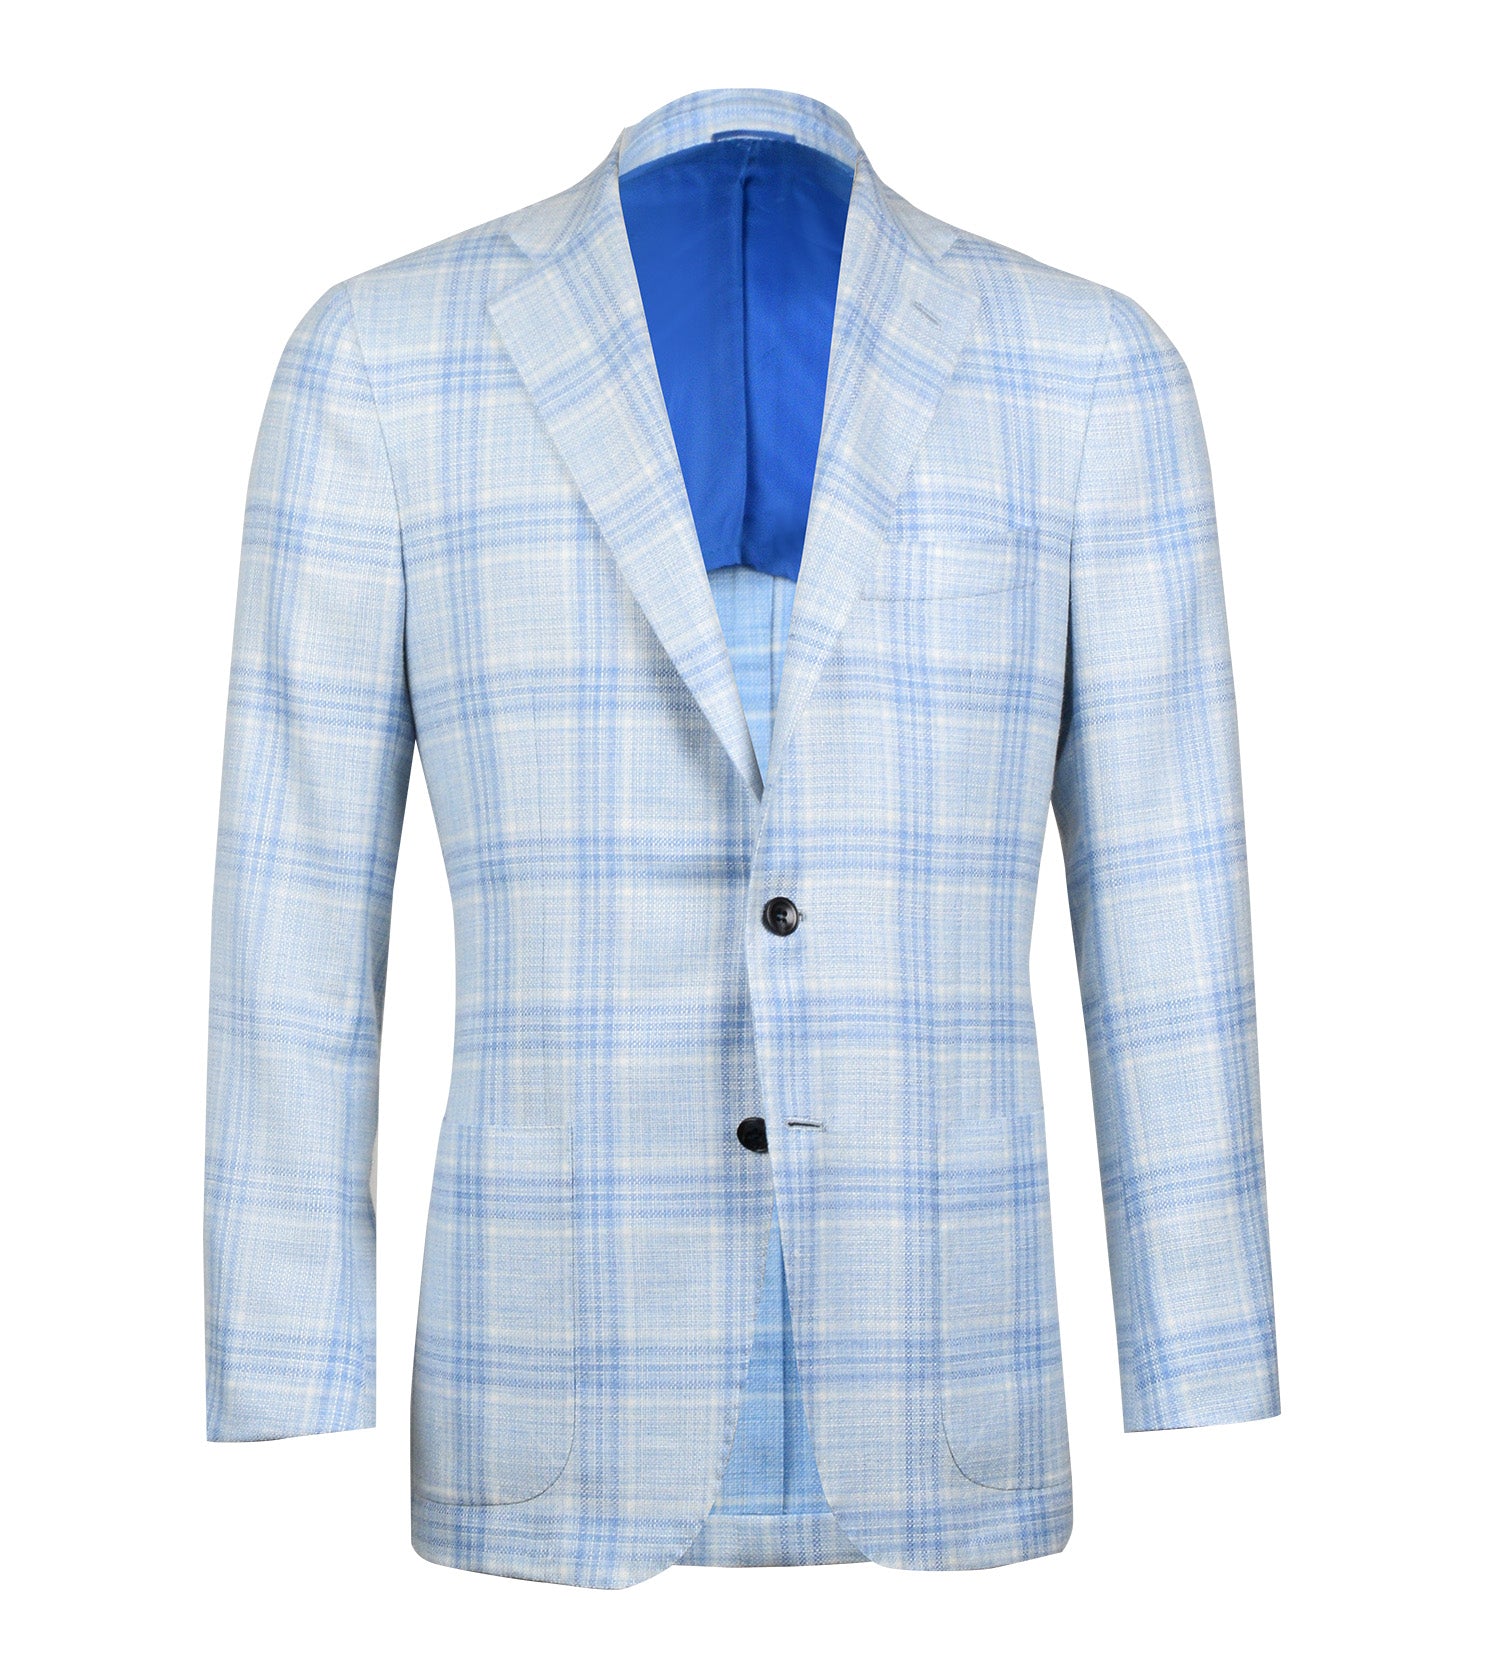 KITON Blue and White Plaid Sport Coat